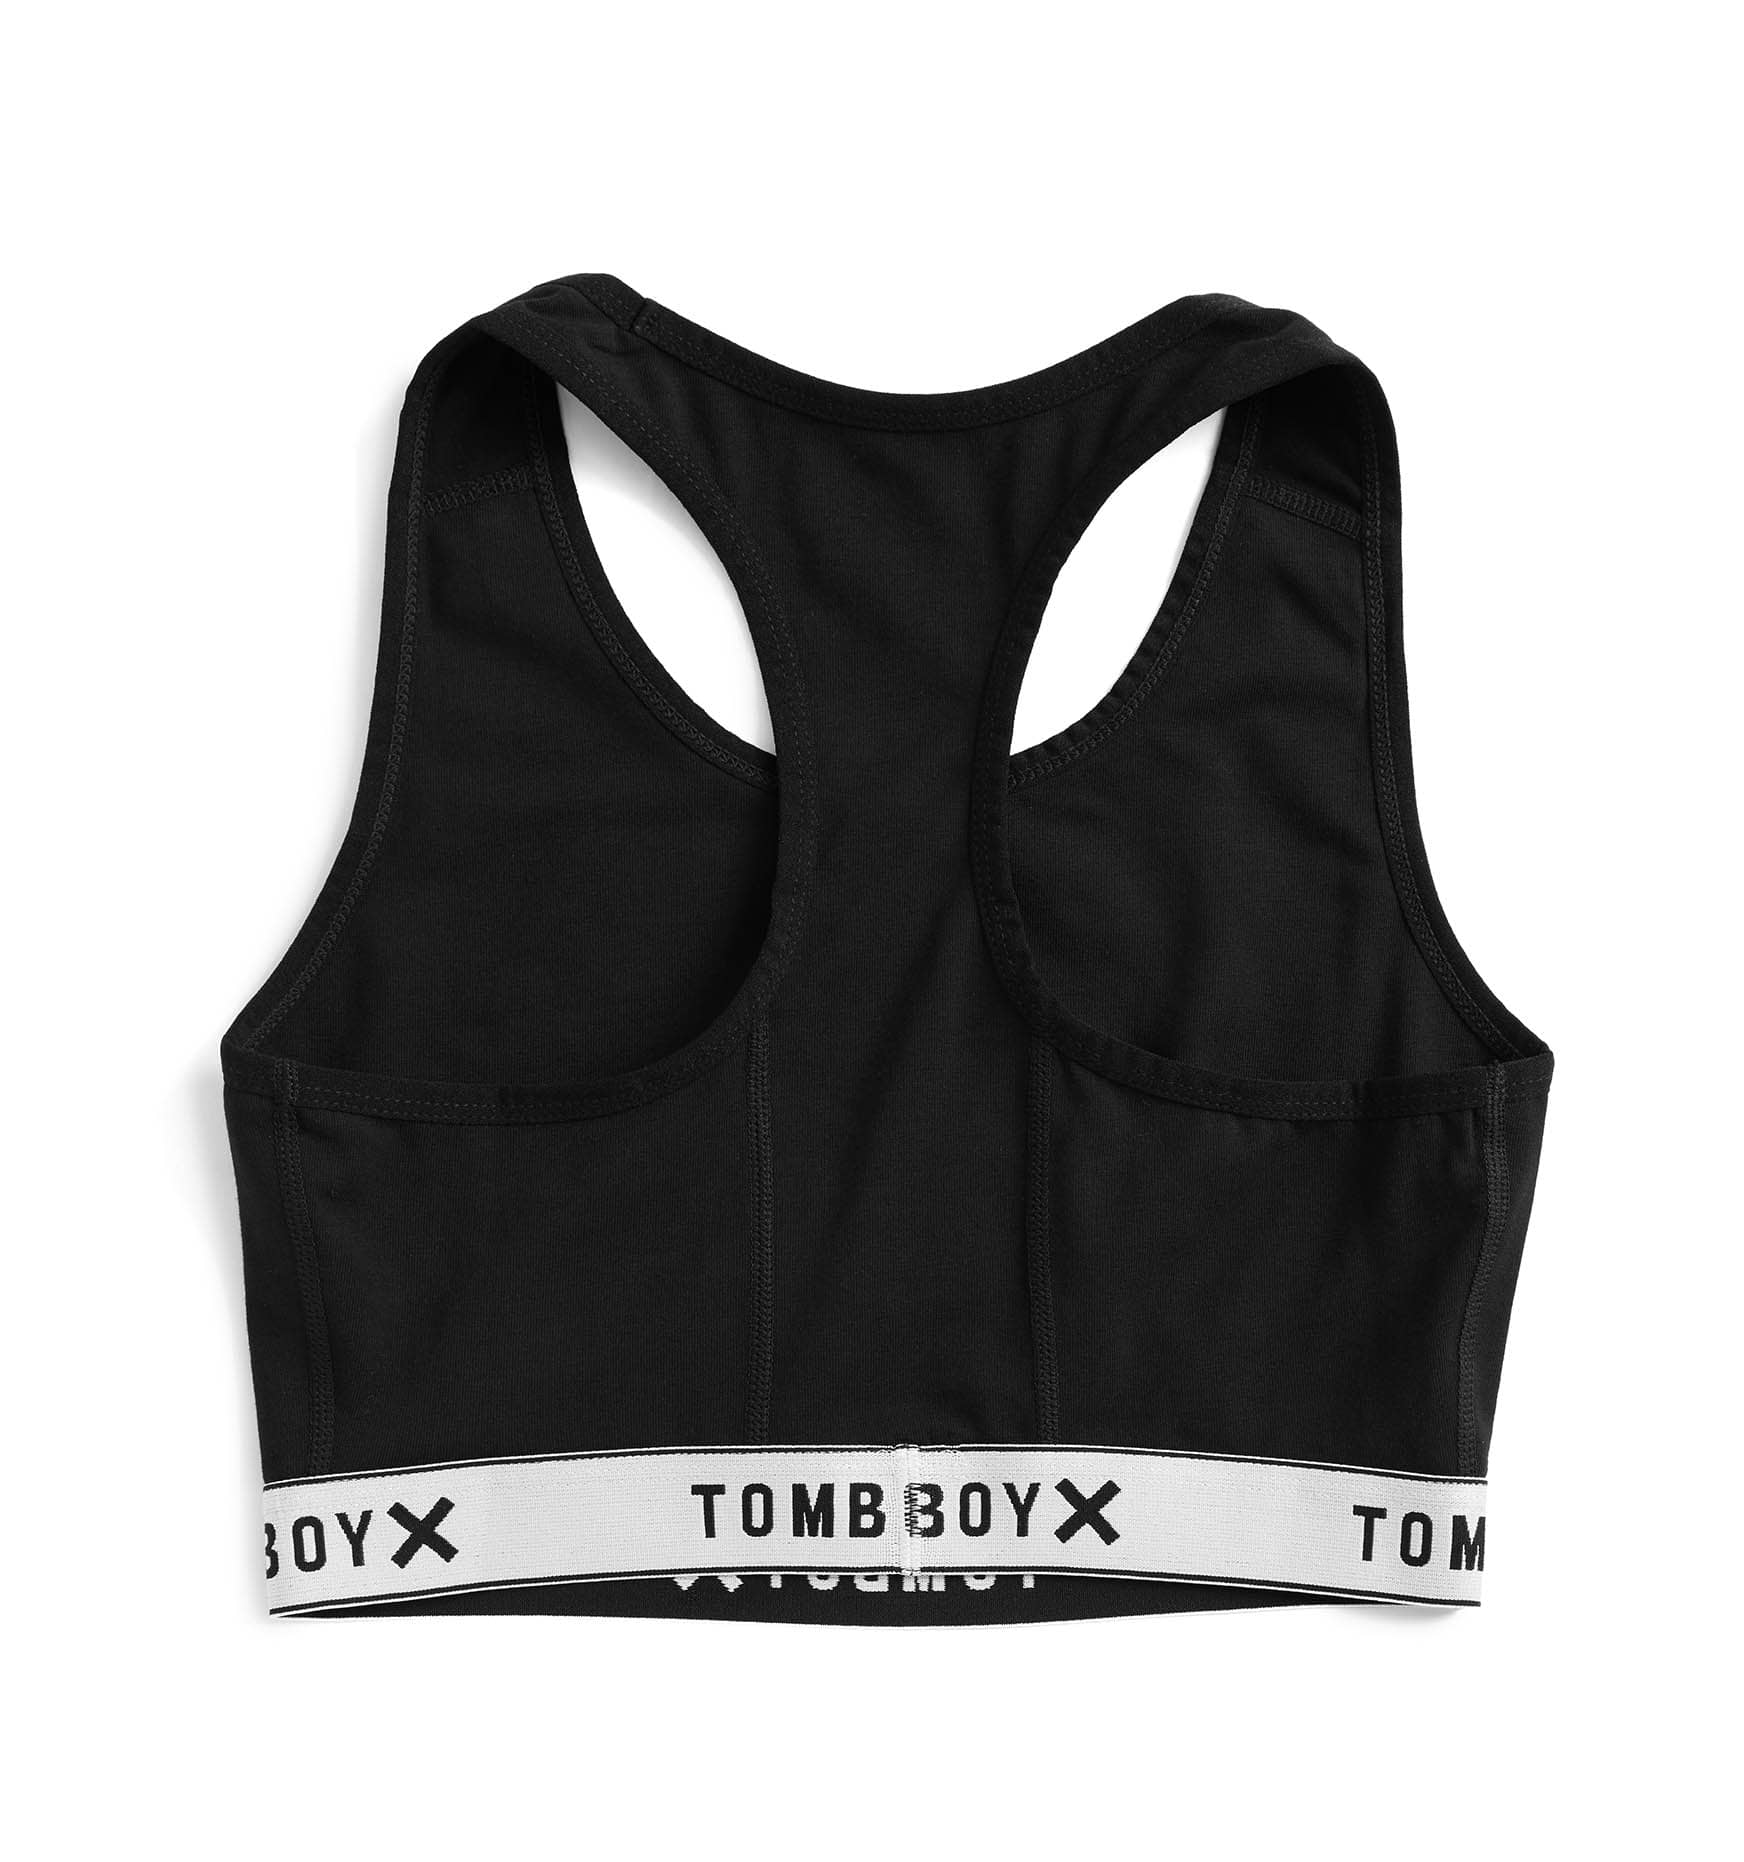 Tomboy X 2x Sports Bra Black Rainbow Band Wireless Pullover